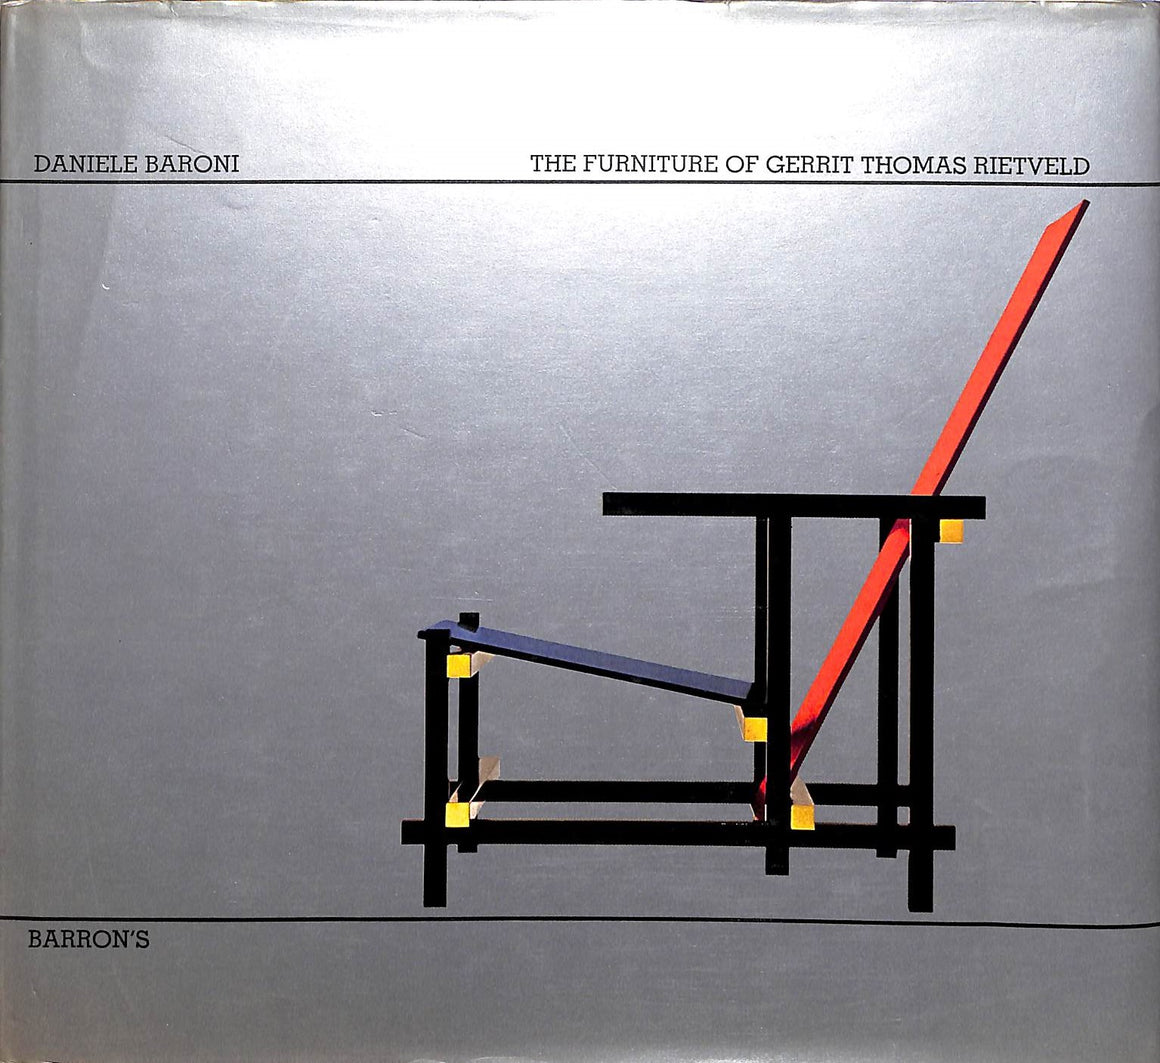 "The Furniture of Gerrit Thomas Rietveld" 1978 BARONI, Daniele